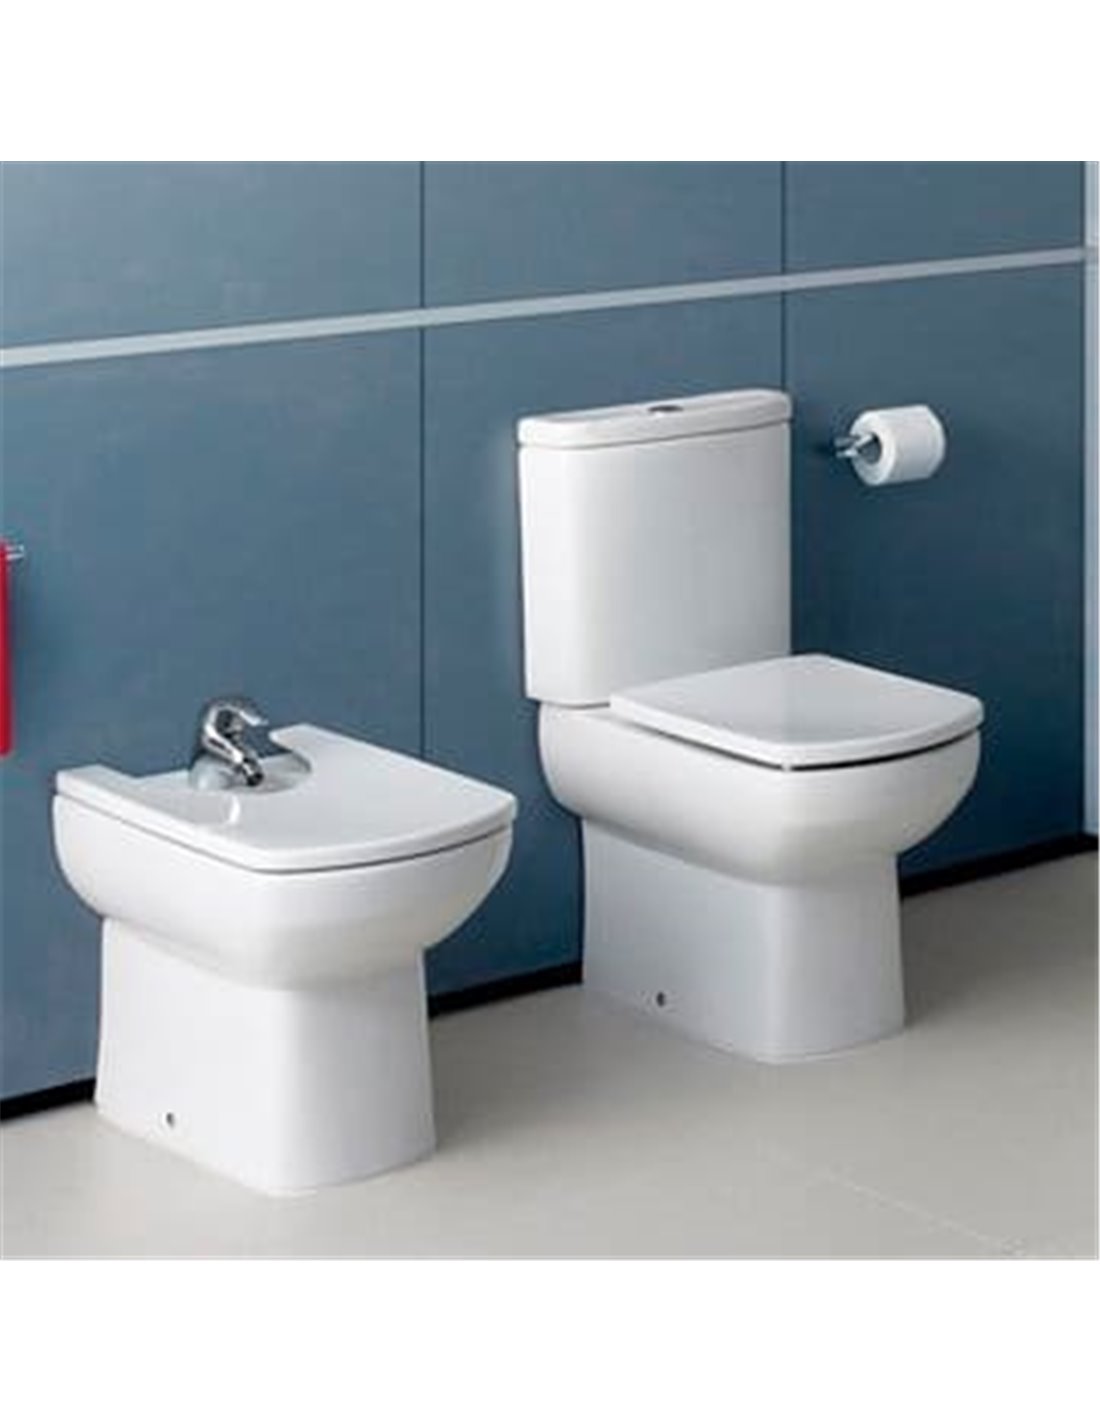 ROCA DAMA SENSO COMPACT Soft Close Toilet Seat Made to Measure